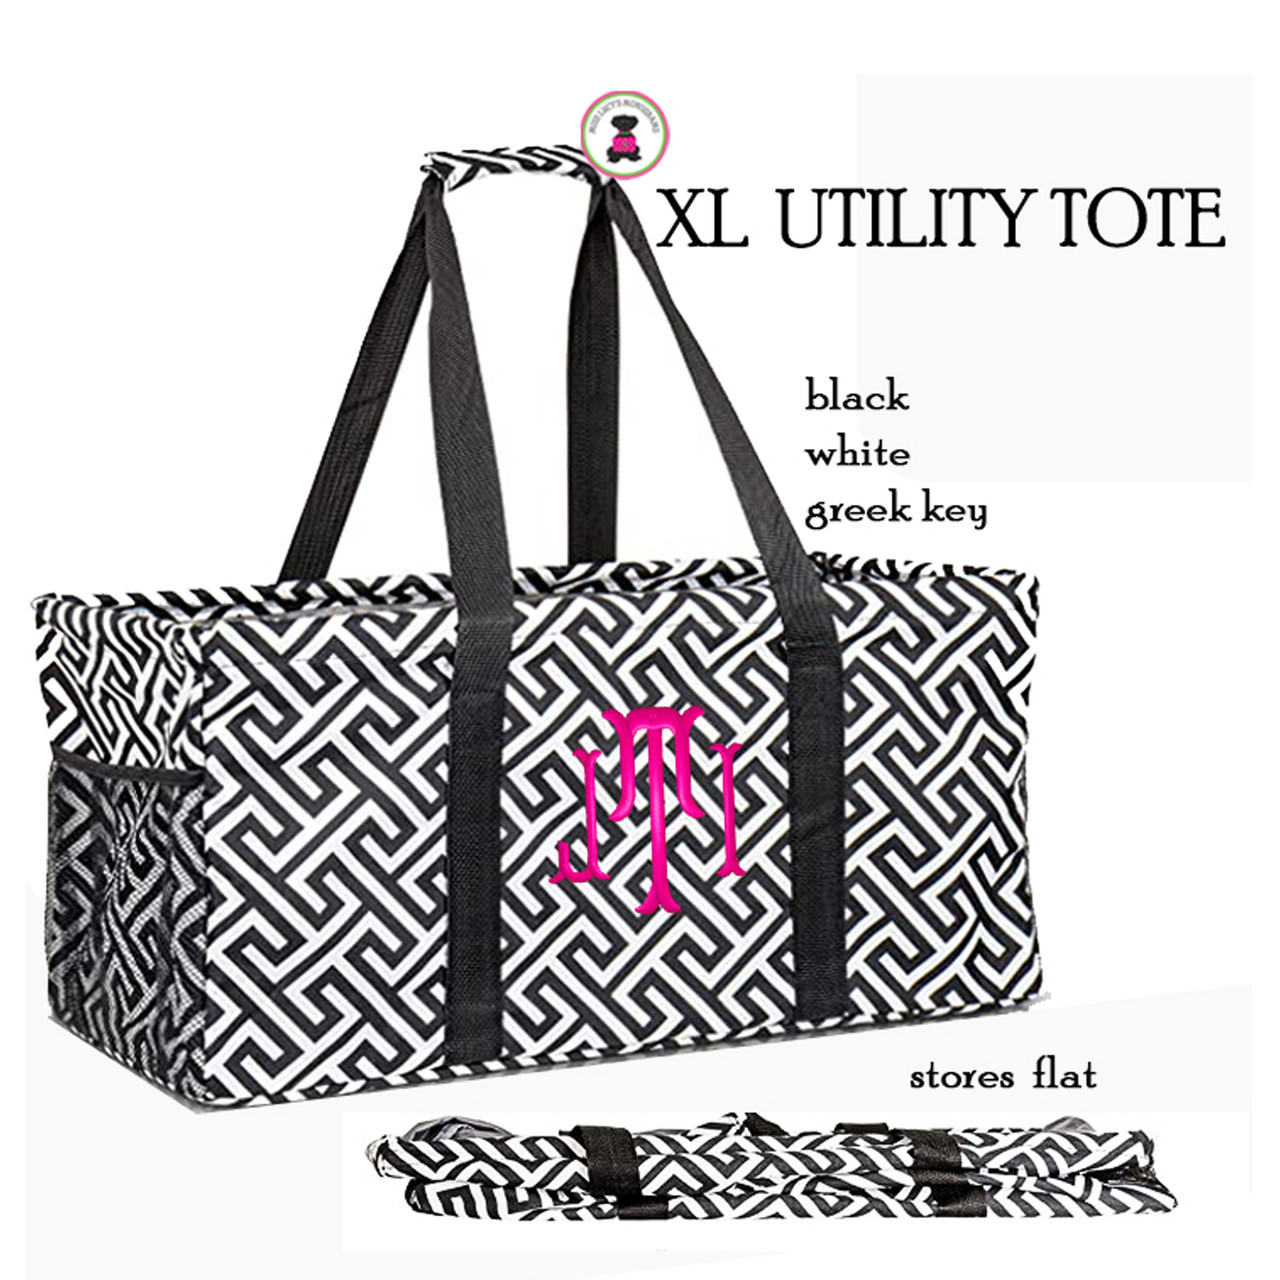 XL black shopper bag